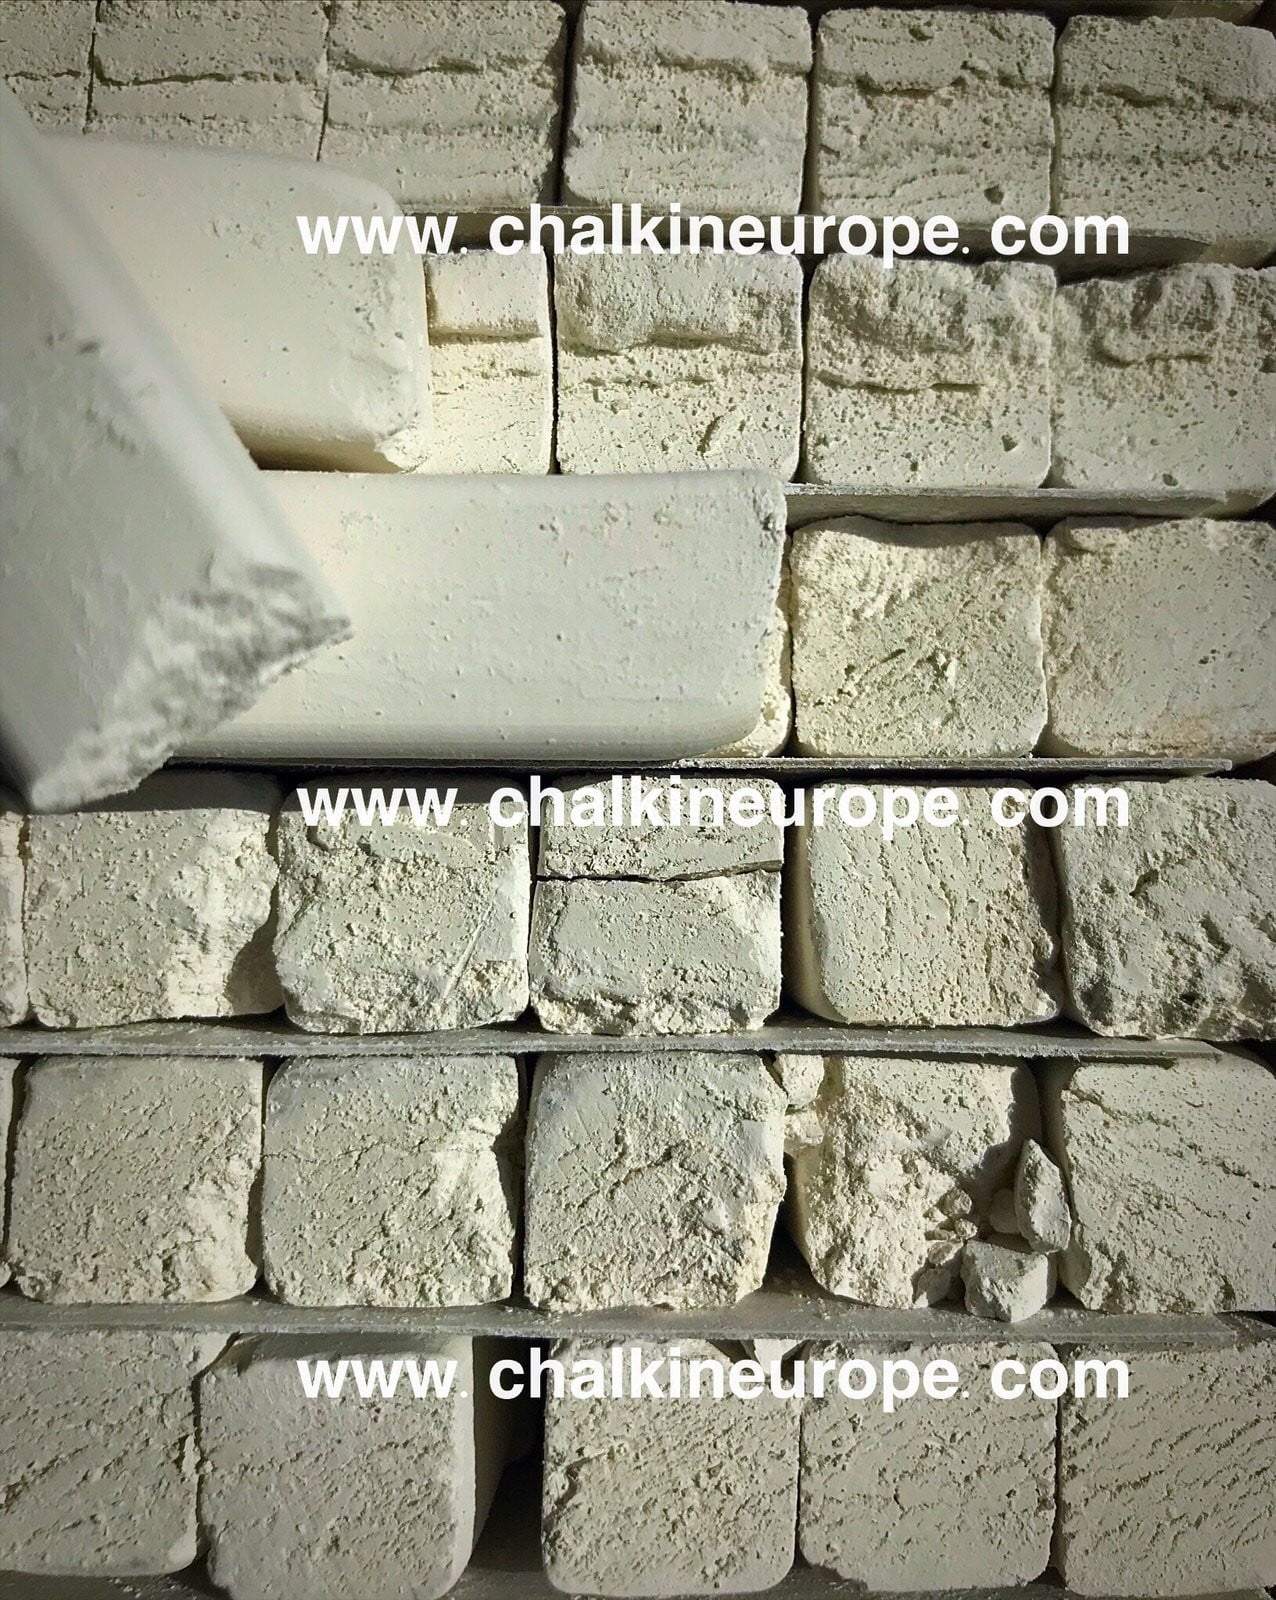 Natural School Chalk - Chalkineurope